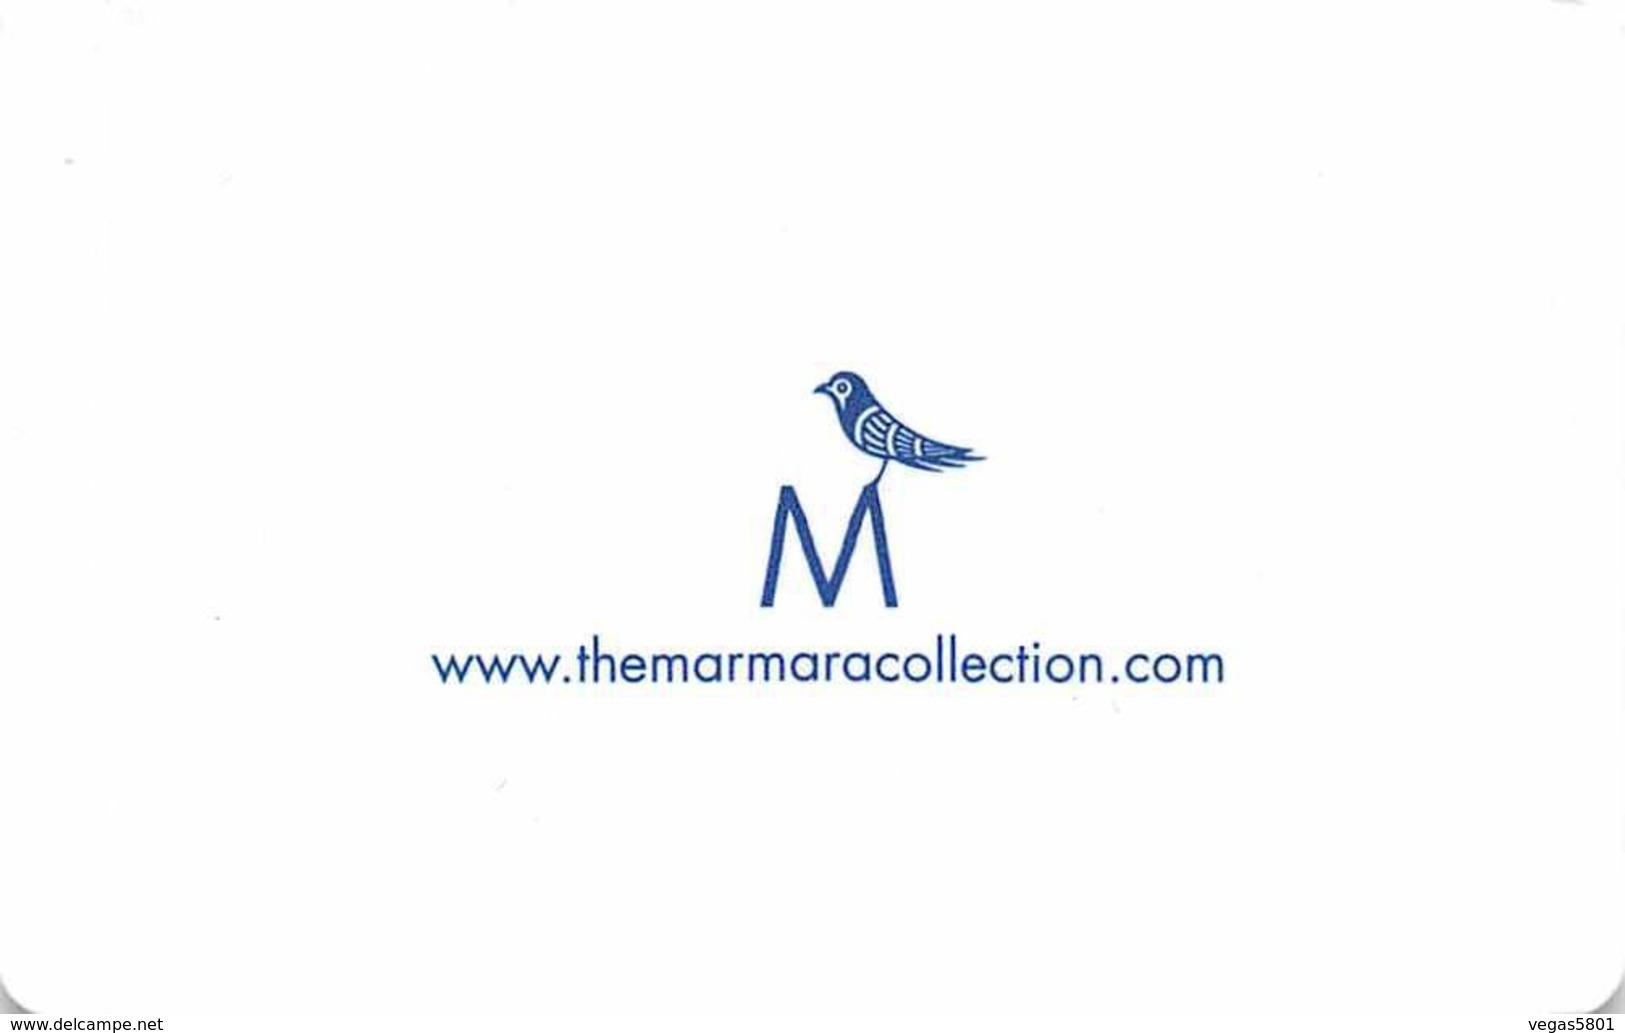 THE MARMARA COLLECTION - Turkey - Hotel Room Key Card, Hotelkarte, Schlüsselkarte, Clé De L'Hôtel - Cartas De Hotels